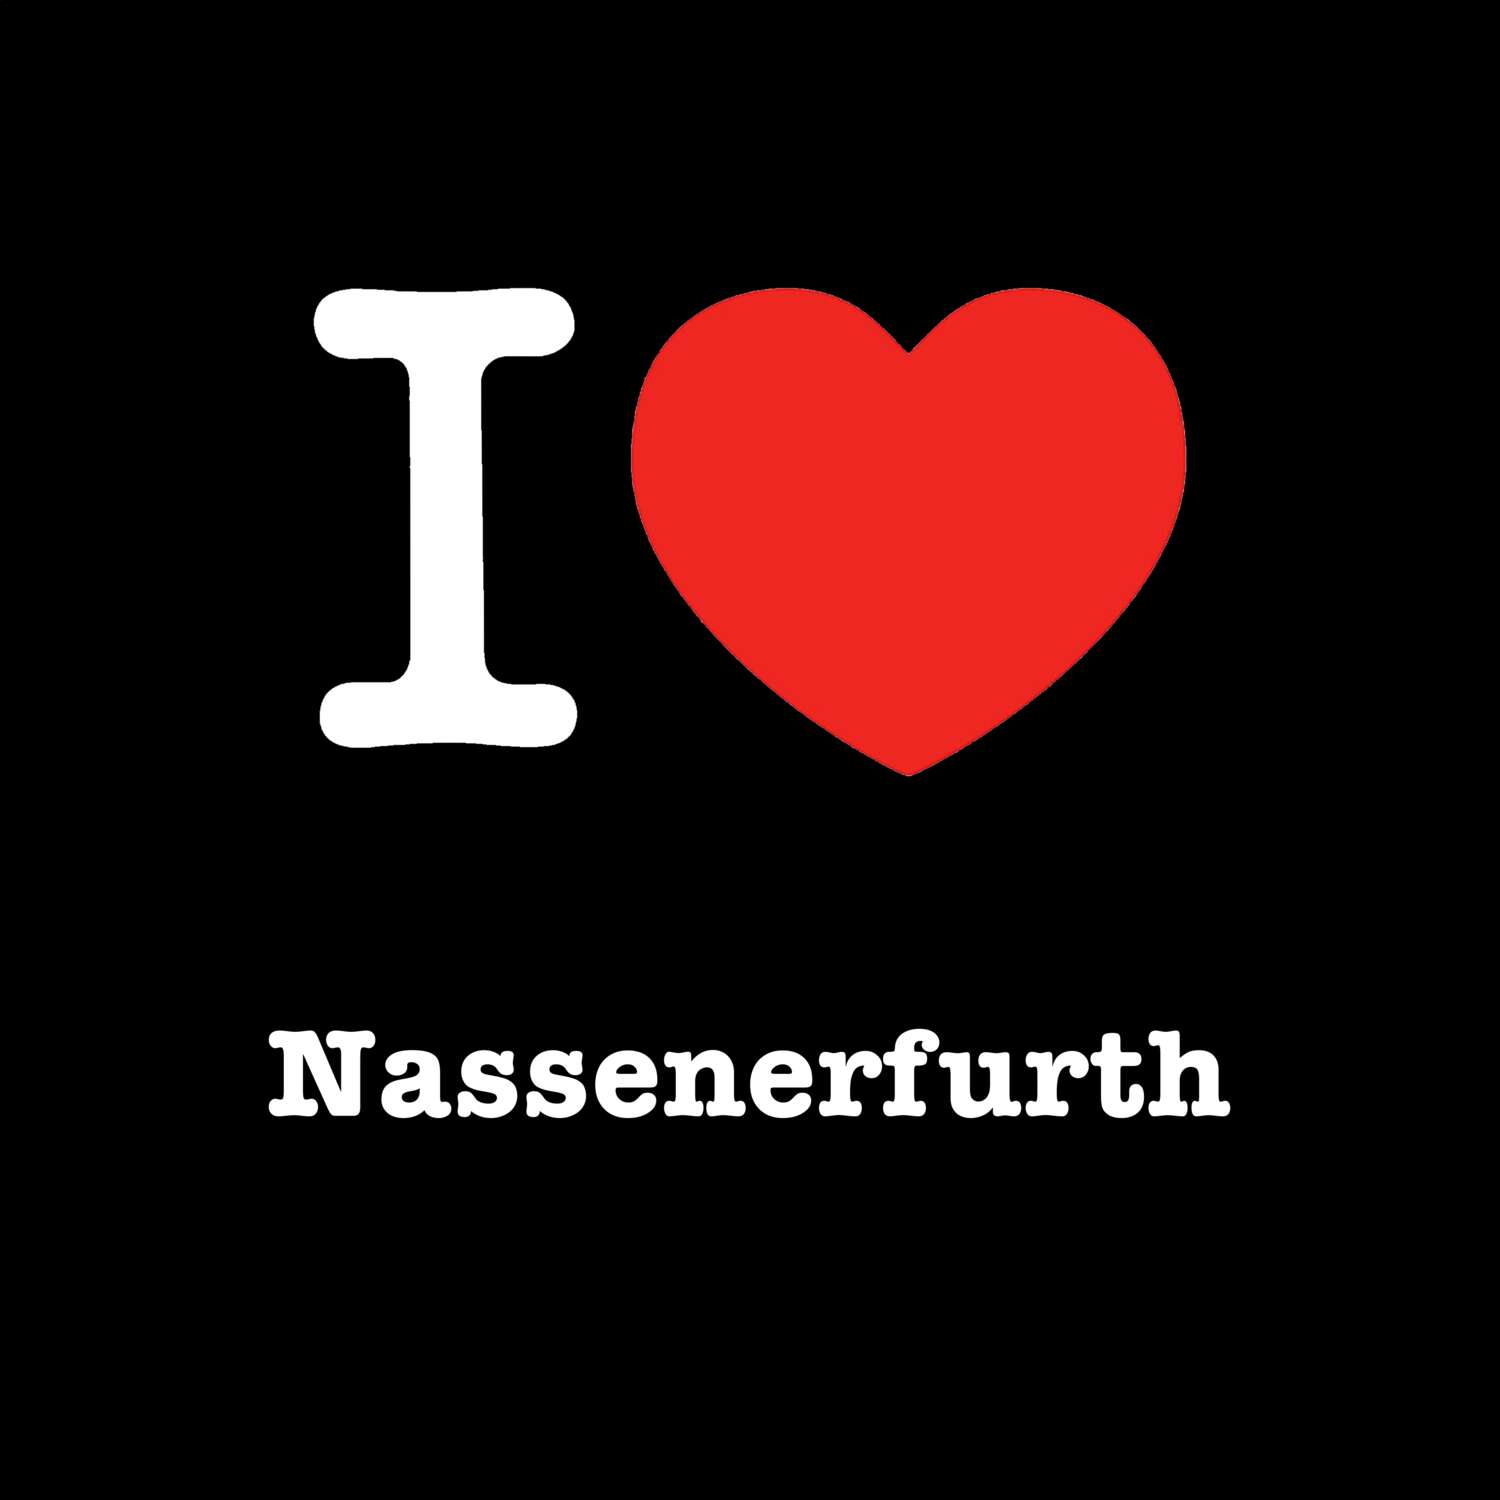 Nassenerfurth T-Shirt »I love«